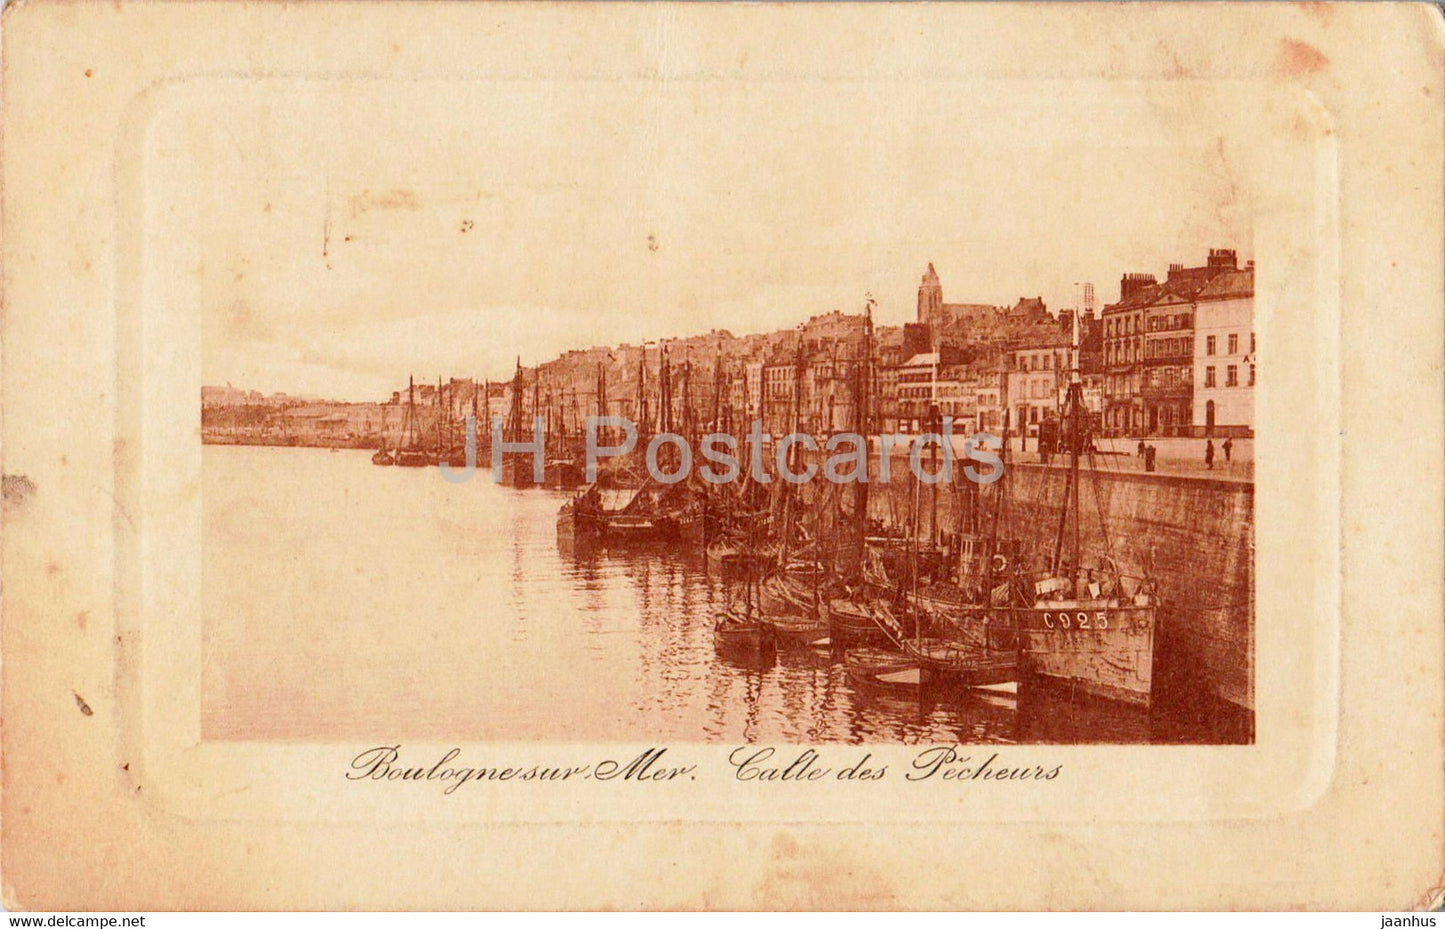 Boulogne sur Mer - Calle des Pecheurs - ship - boat - old postcard - 1917 - France - used - JH Postcards